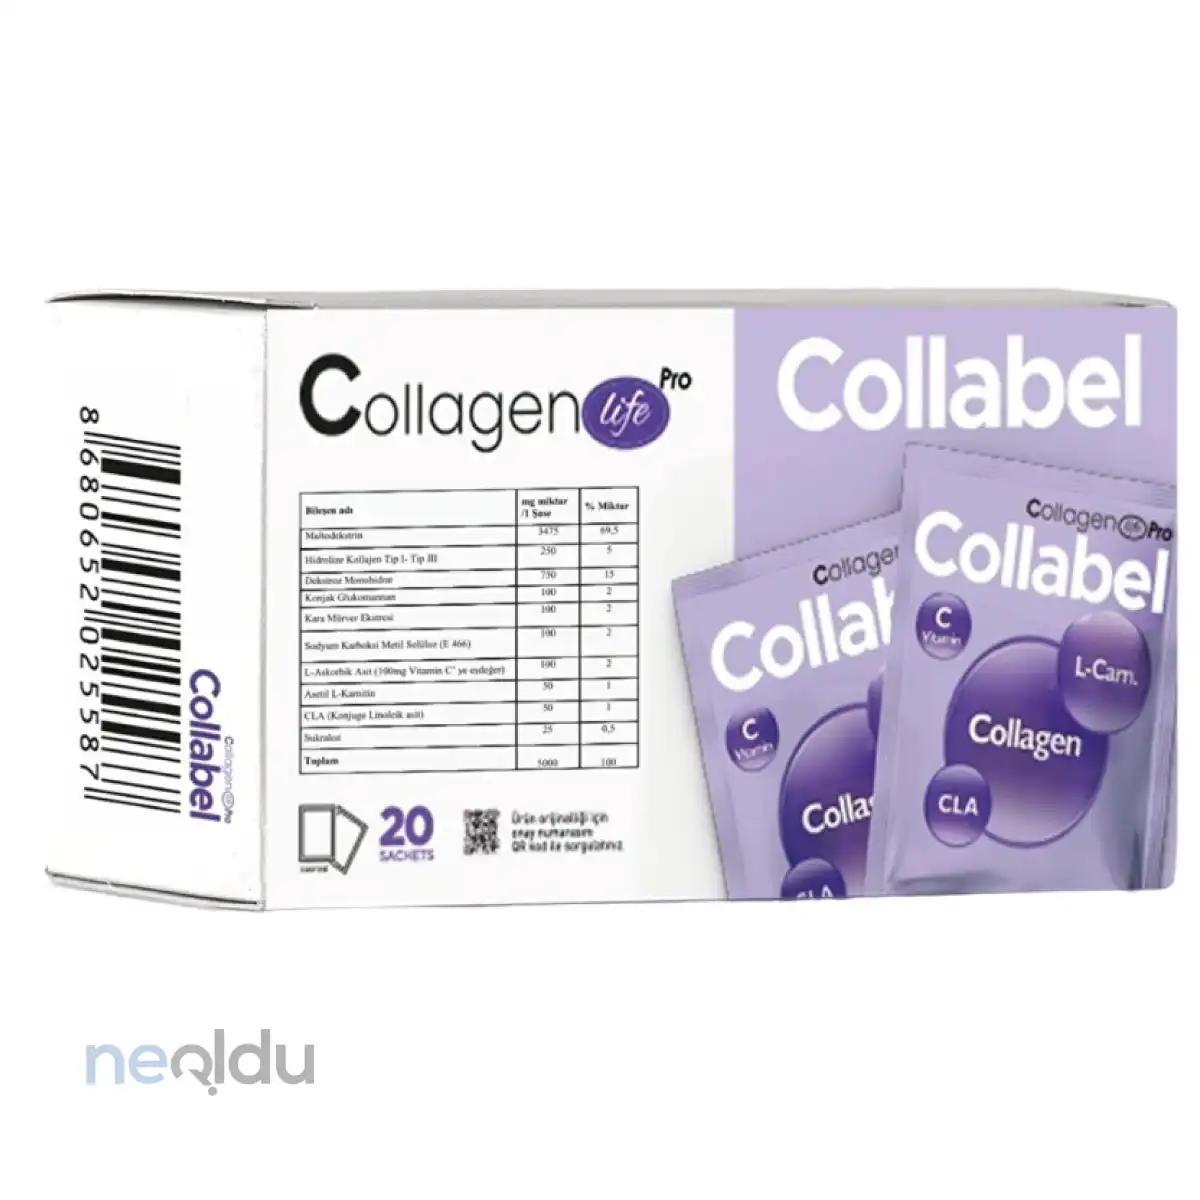 Collagen Life Pro Collabel İnceleme